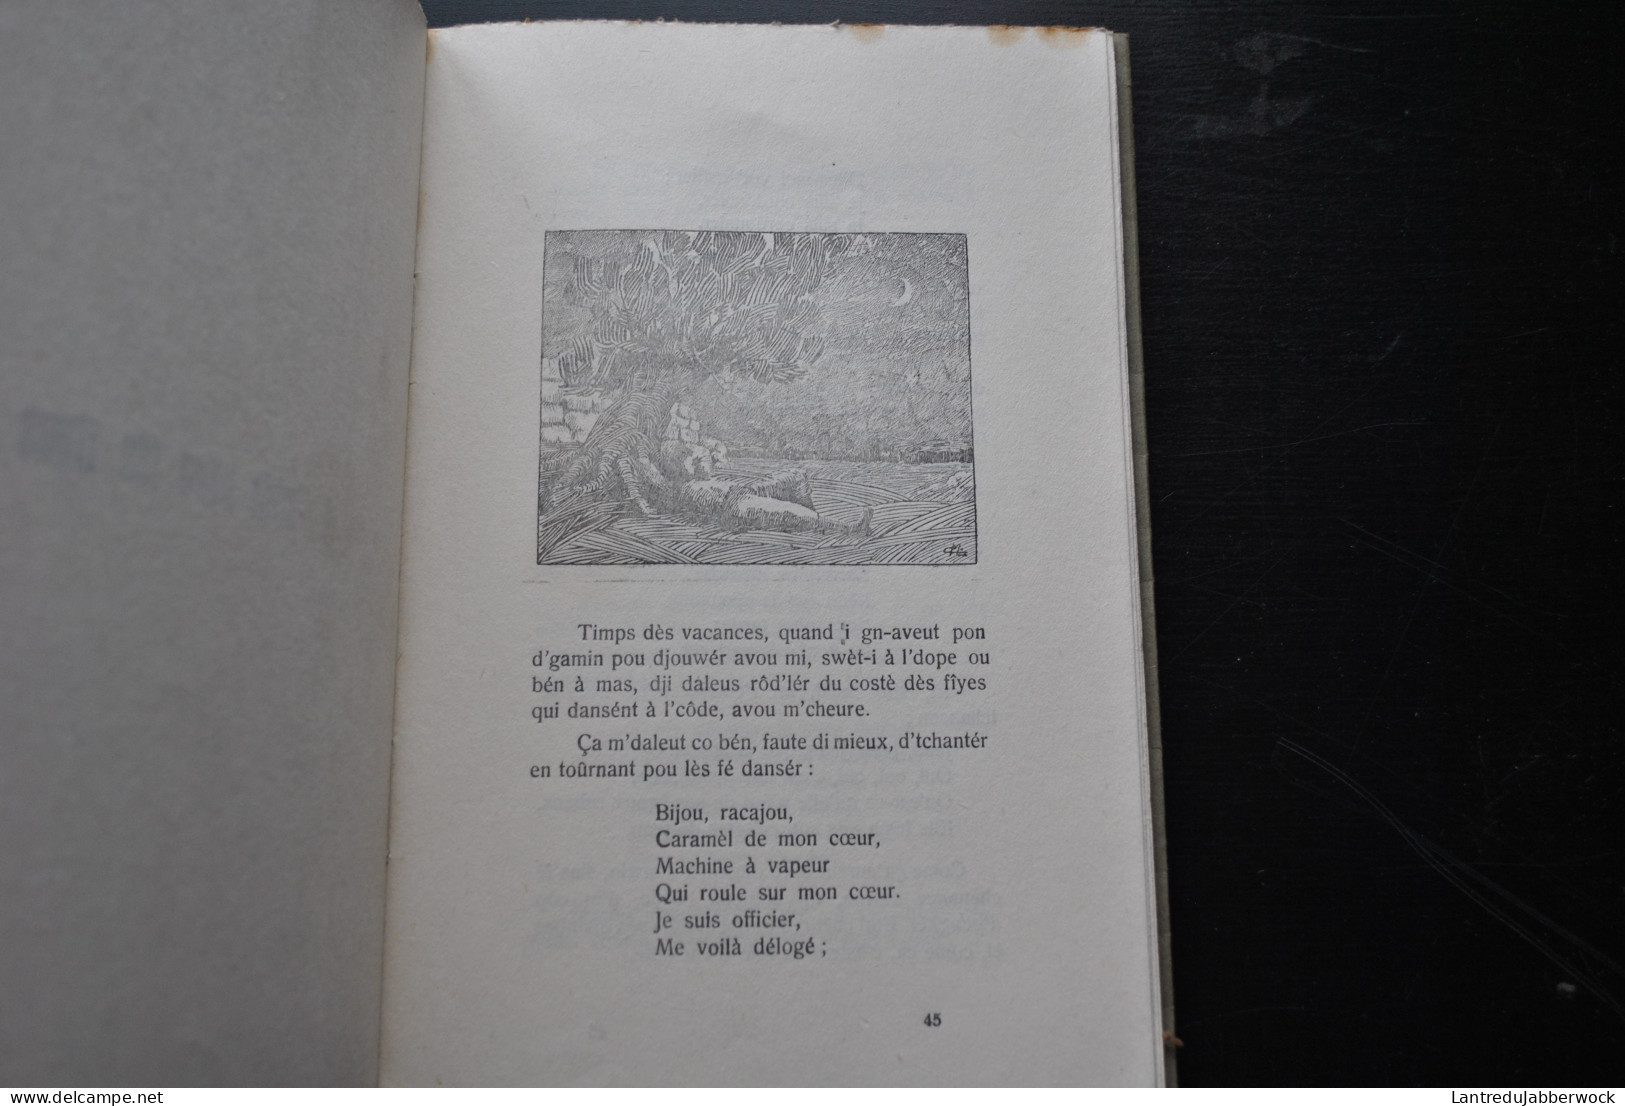 Firmin CALLAERT Avou ène ache et in bos d'voye Recueil de contes WALLON Illustrations de C. MARLIER HENIN Farciennes